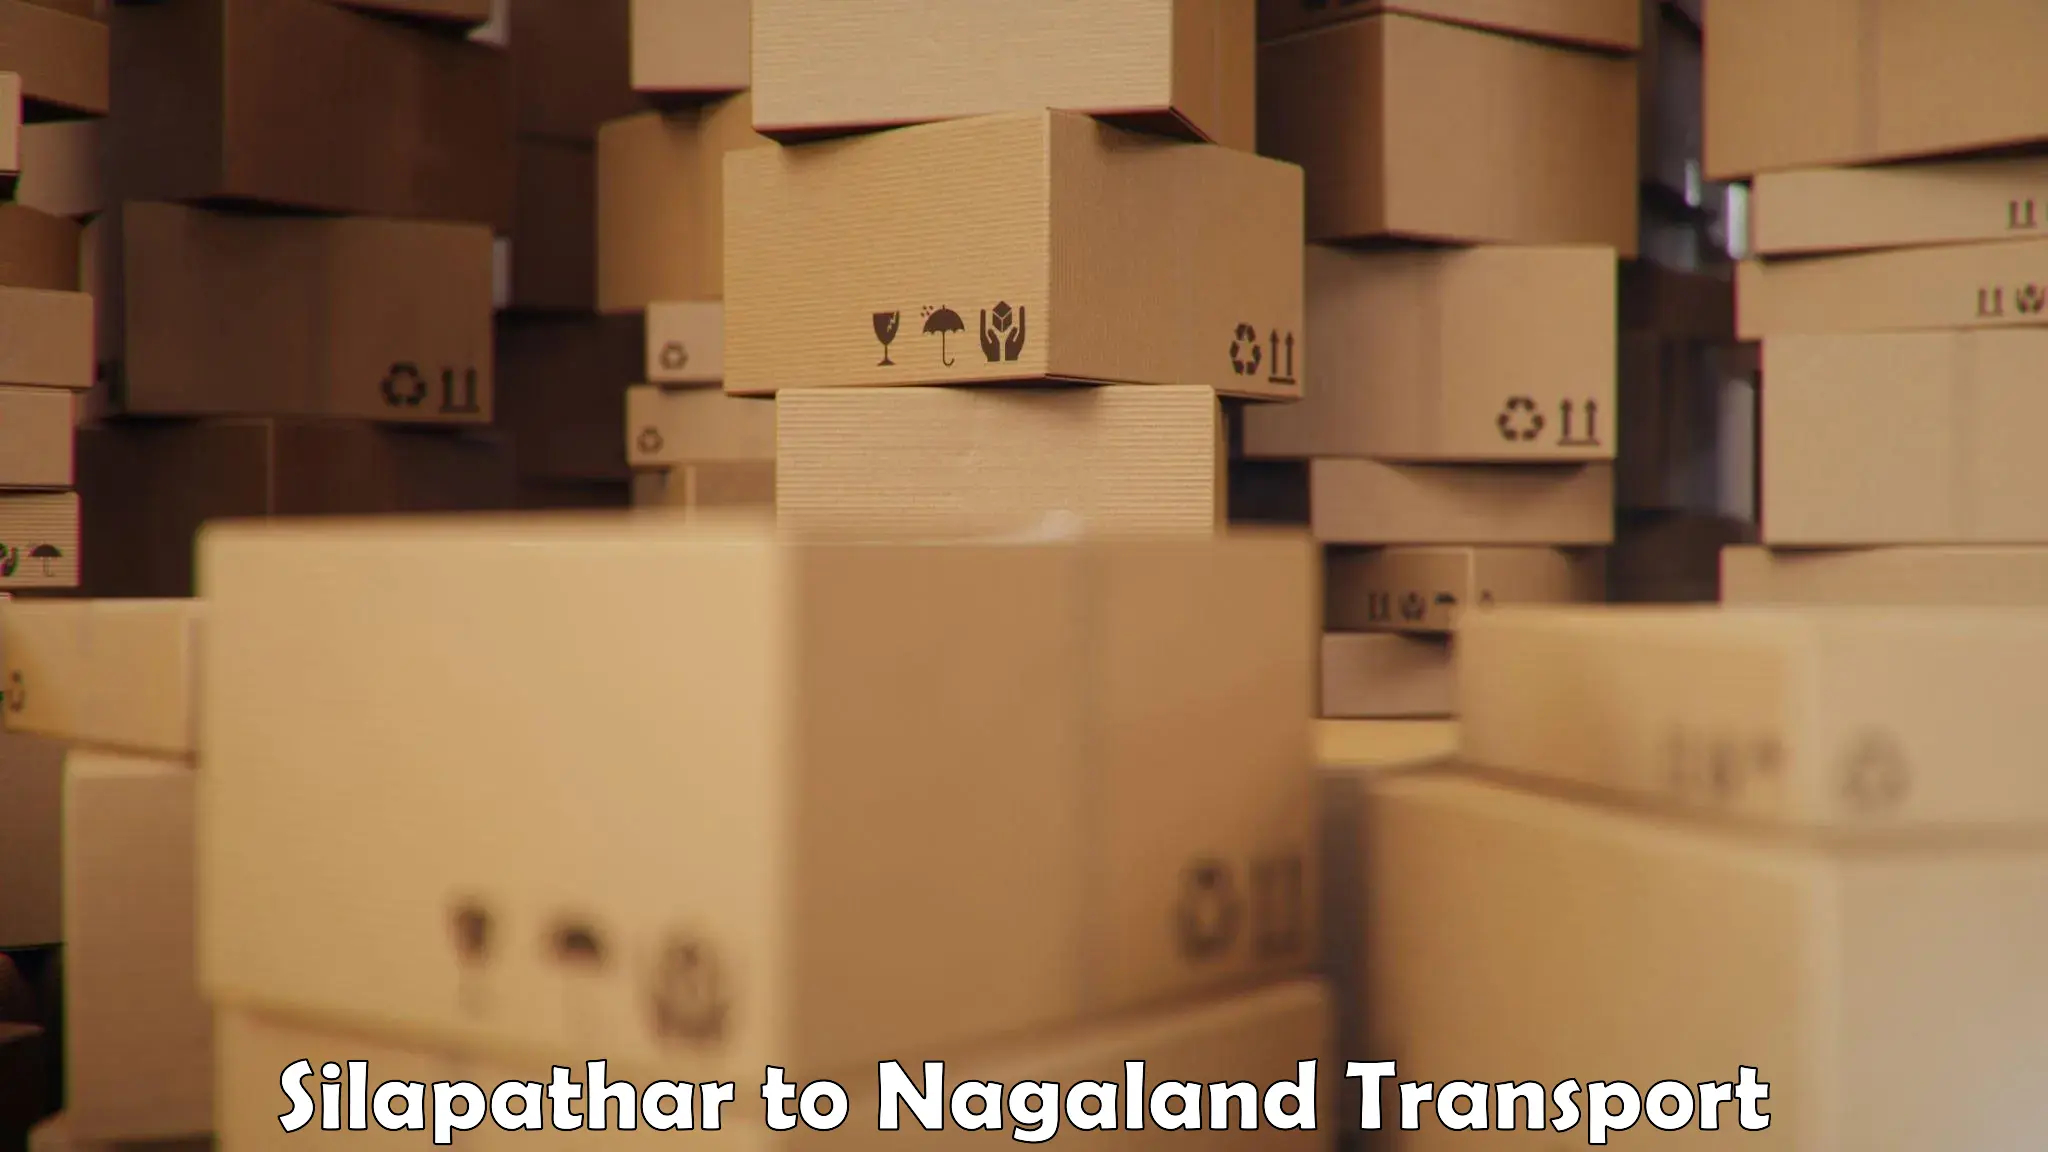 Daily transport service Silapathar to Nagaland